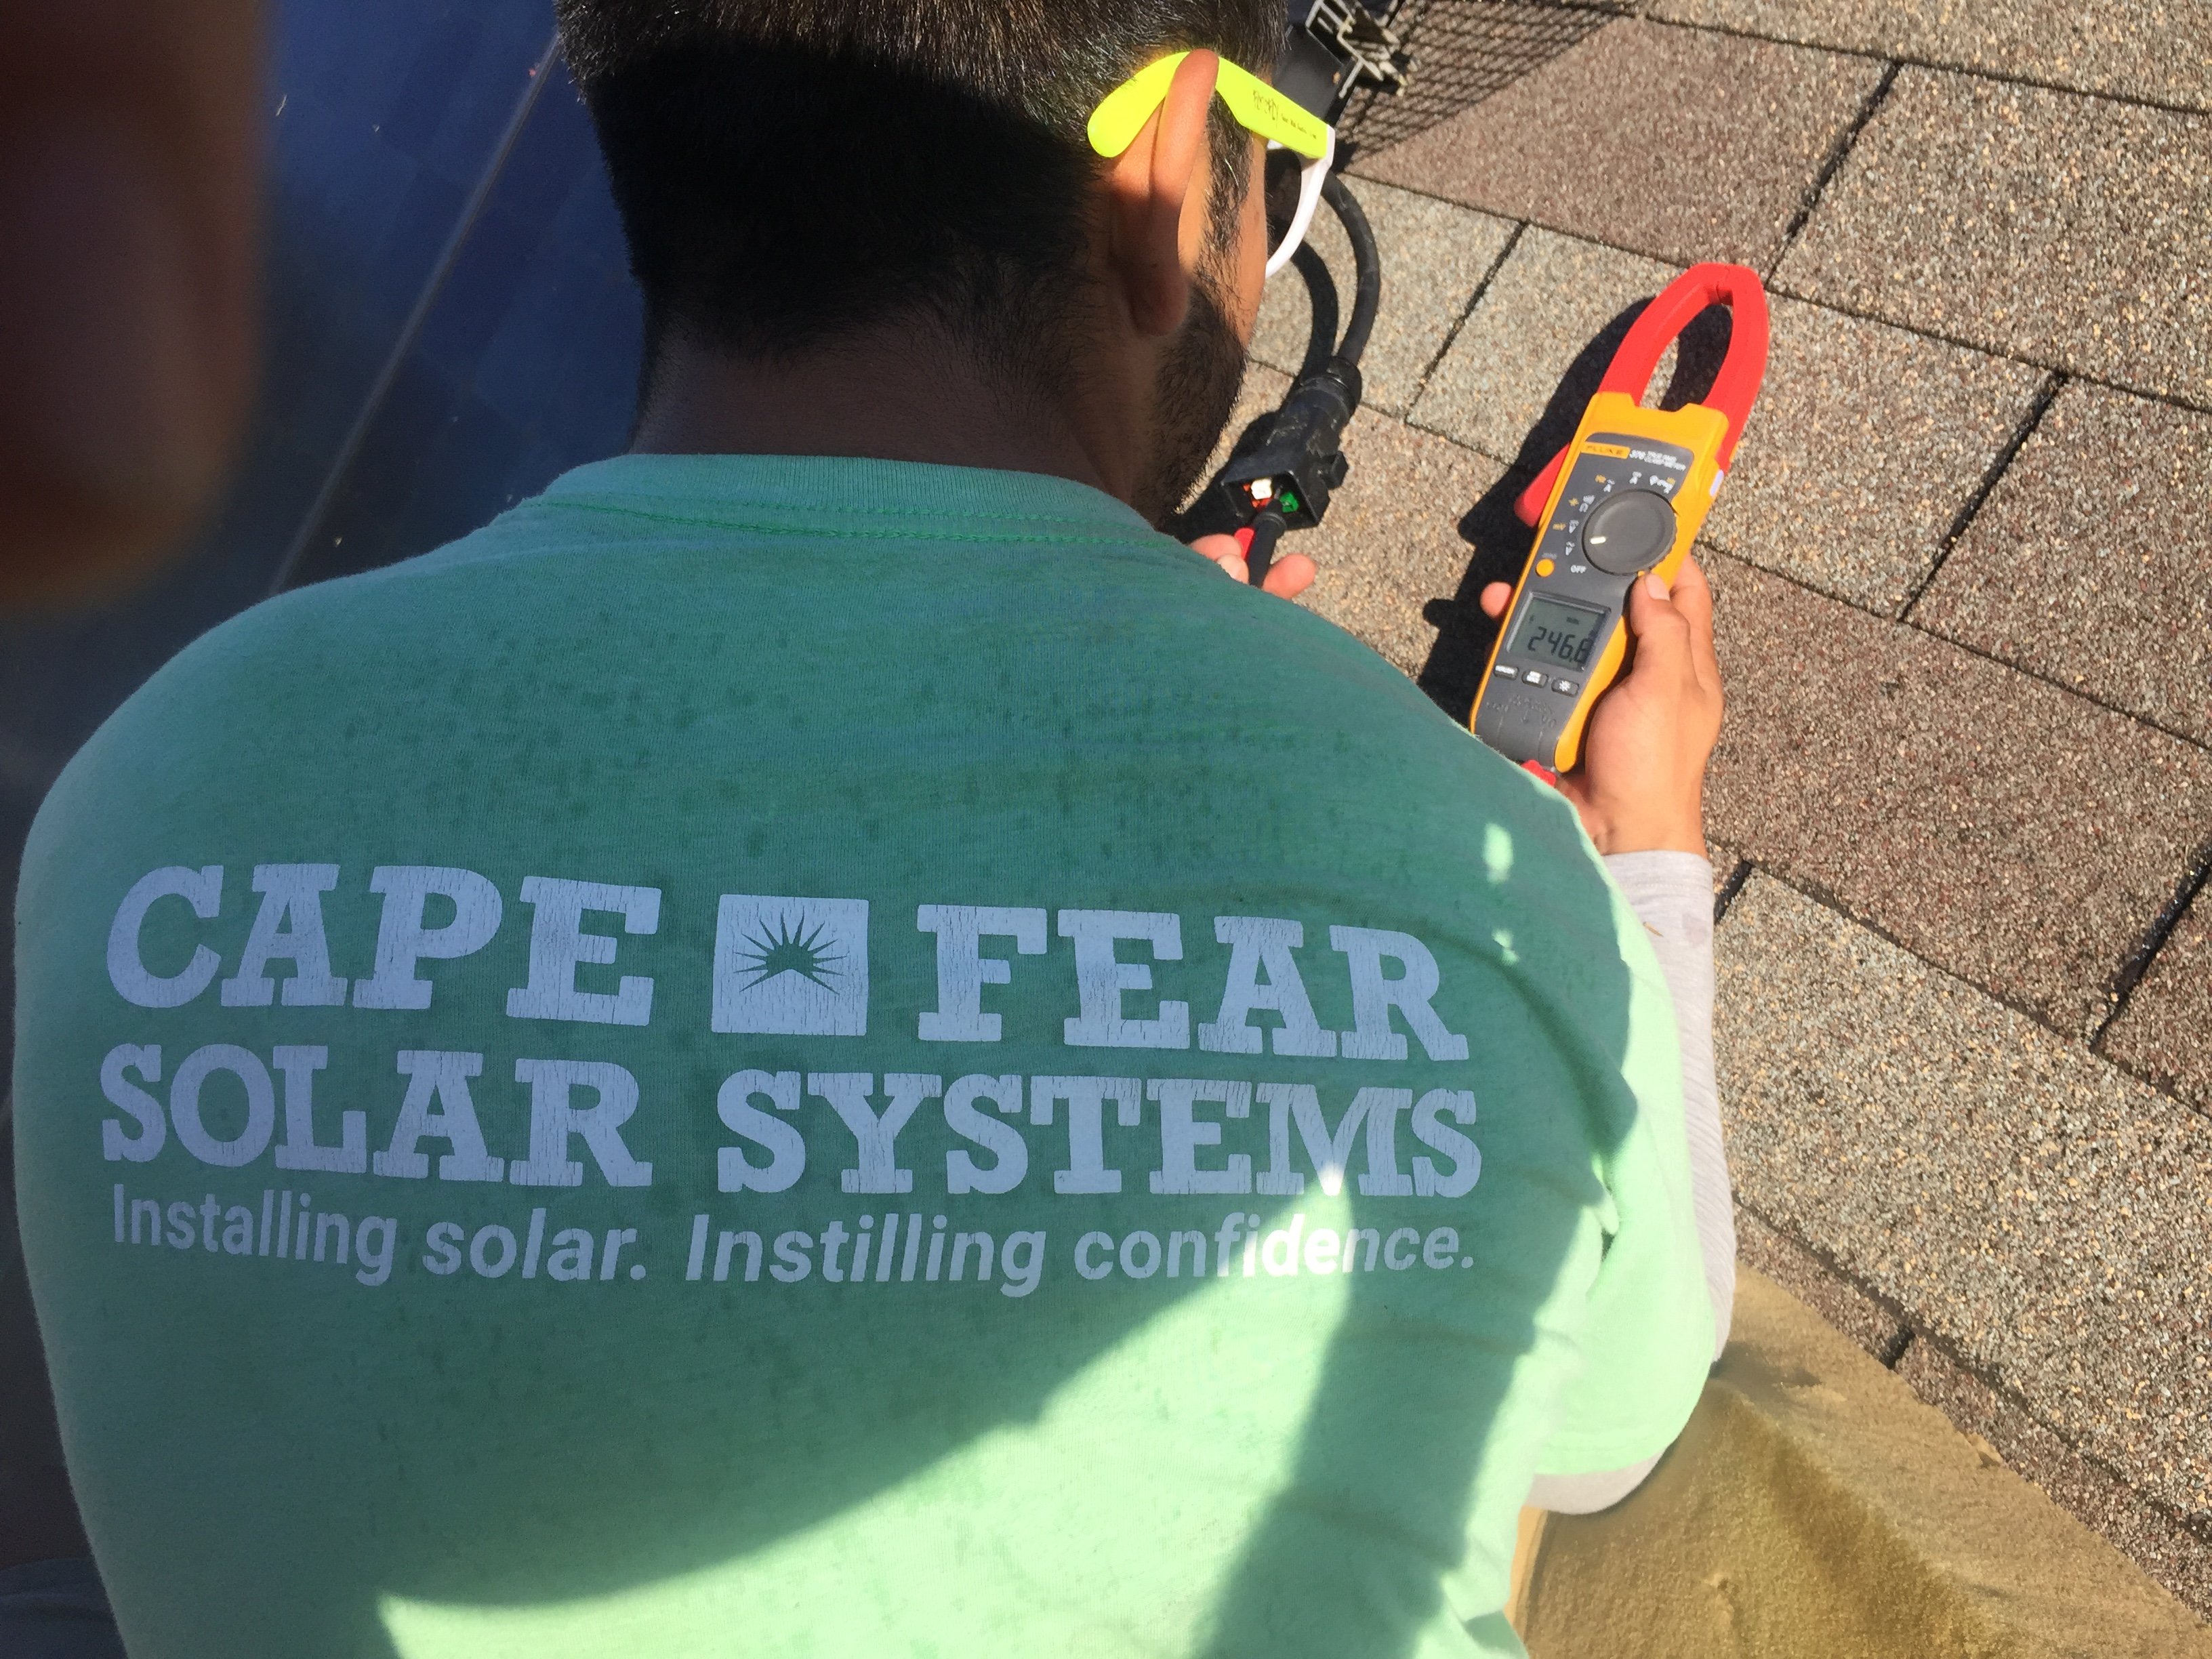 Imagen cortesía de Cape Fear Solar Systems